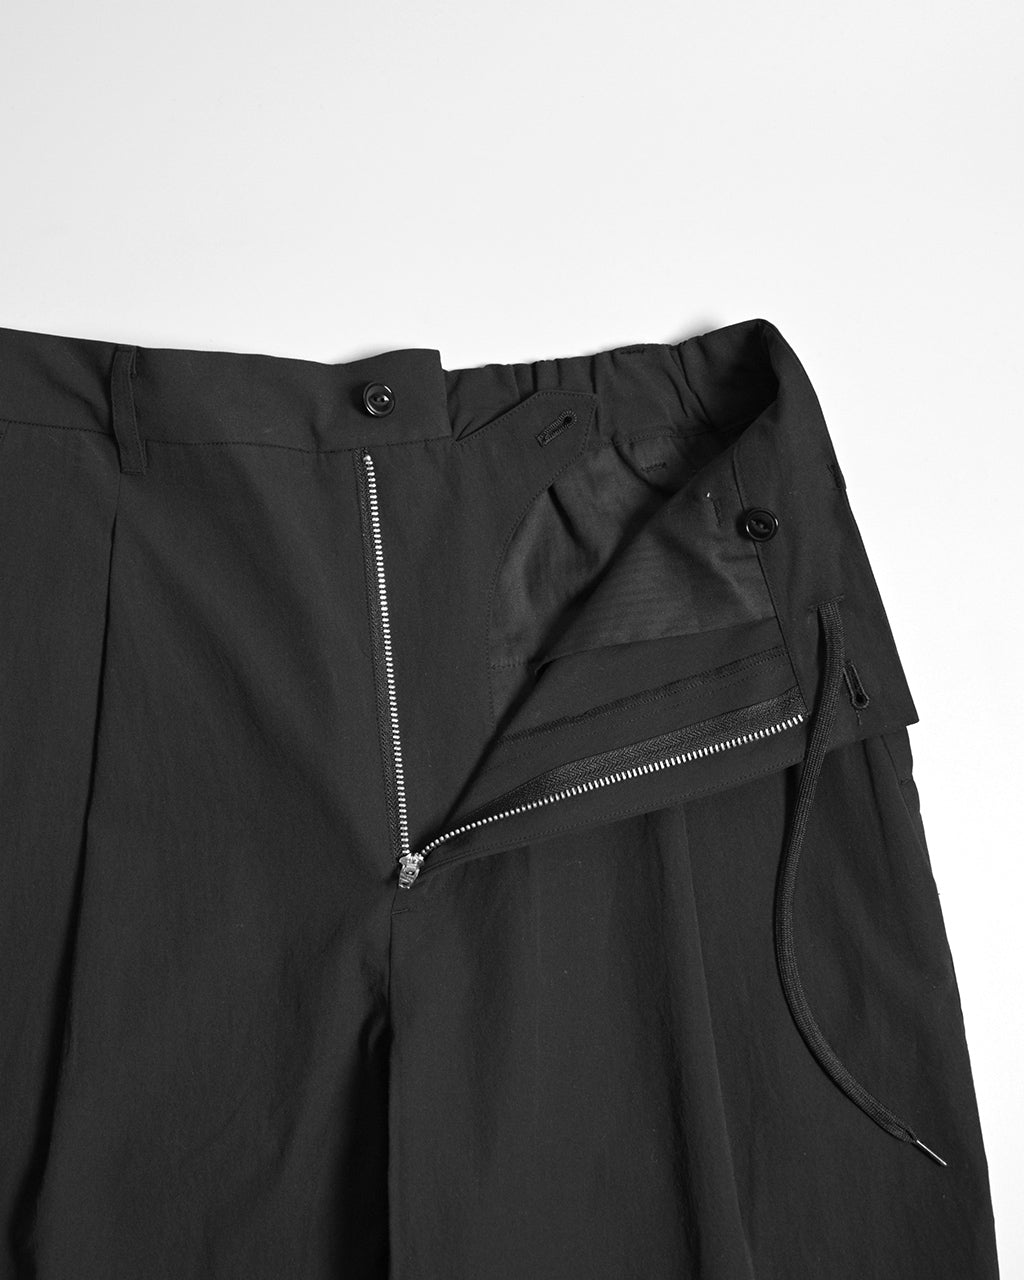 A Vontade アボンタージ ワンタック イージー トラウザーズ 1 Tack Easy Trousers パンツ スラックス VTD-0470-PT3【送料無料】